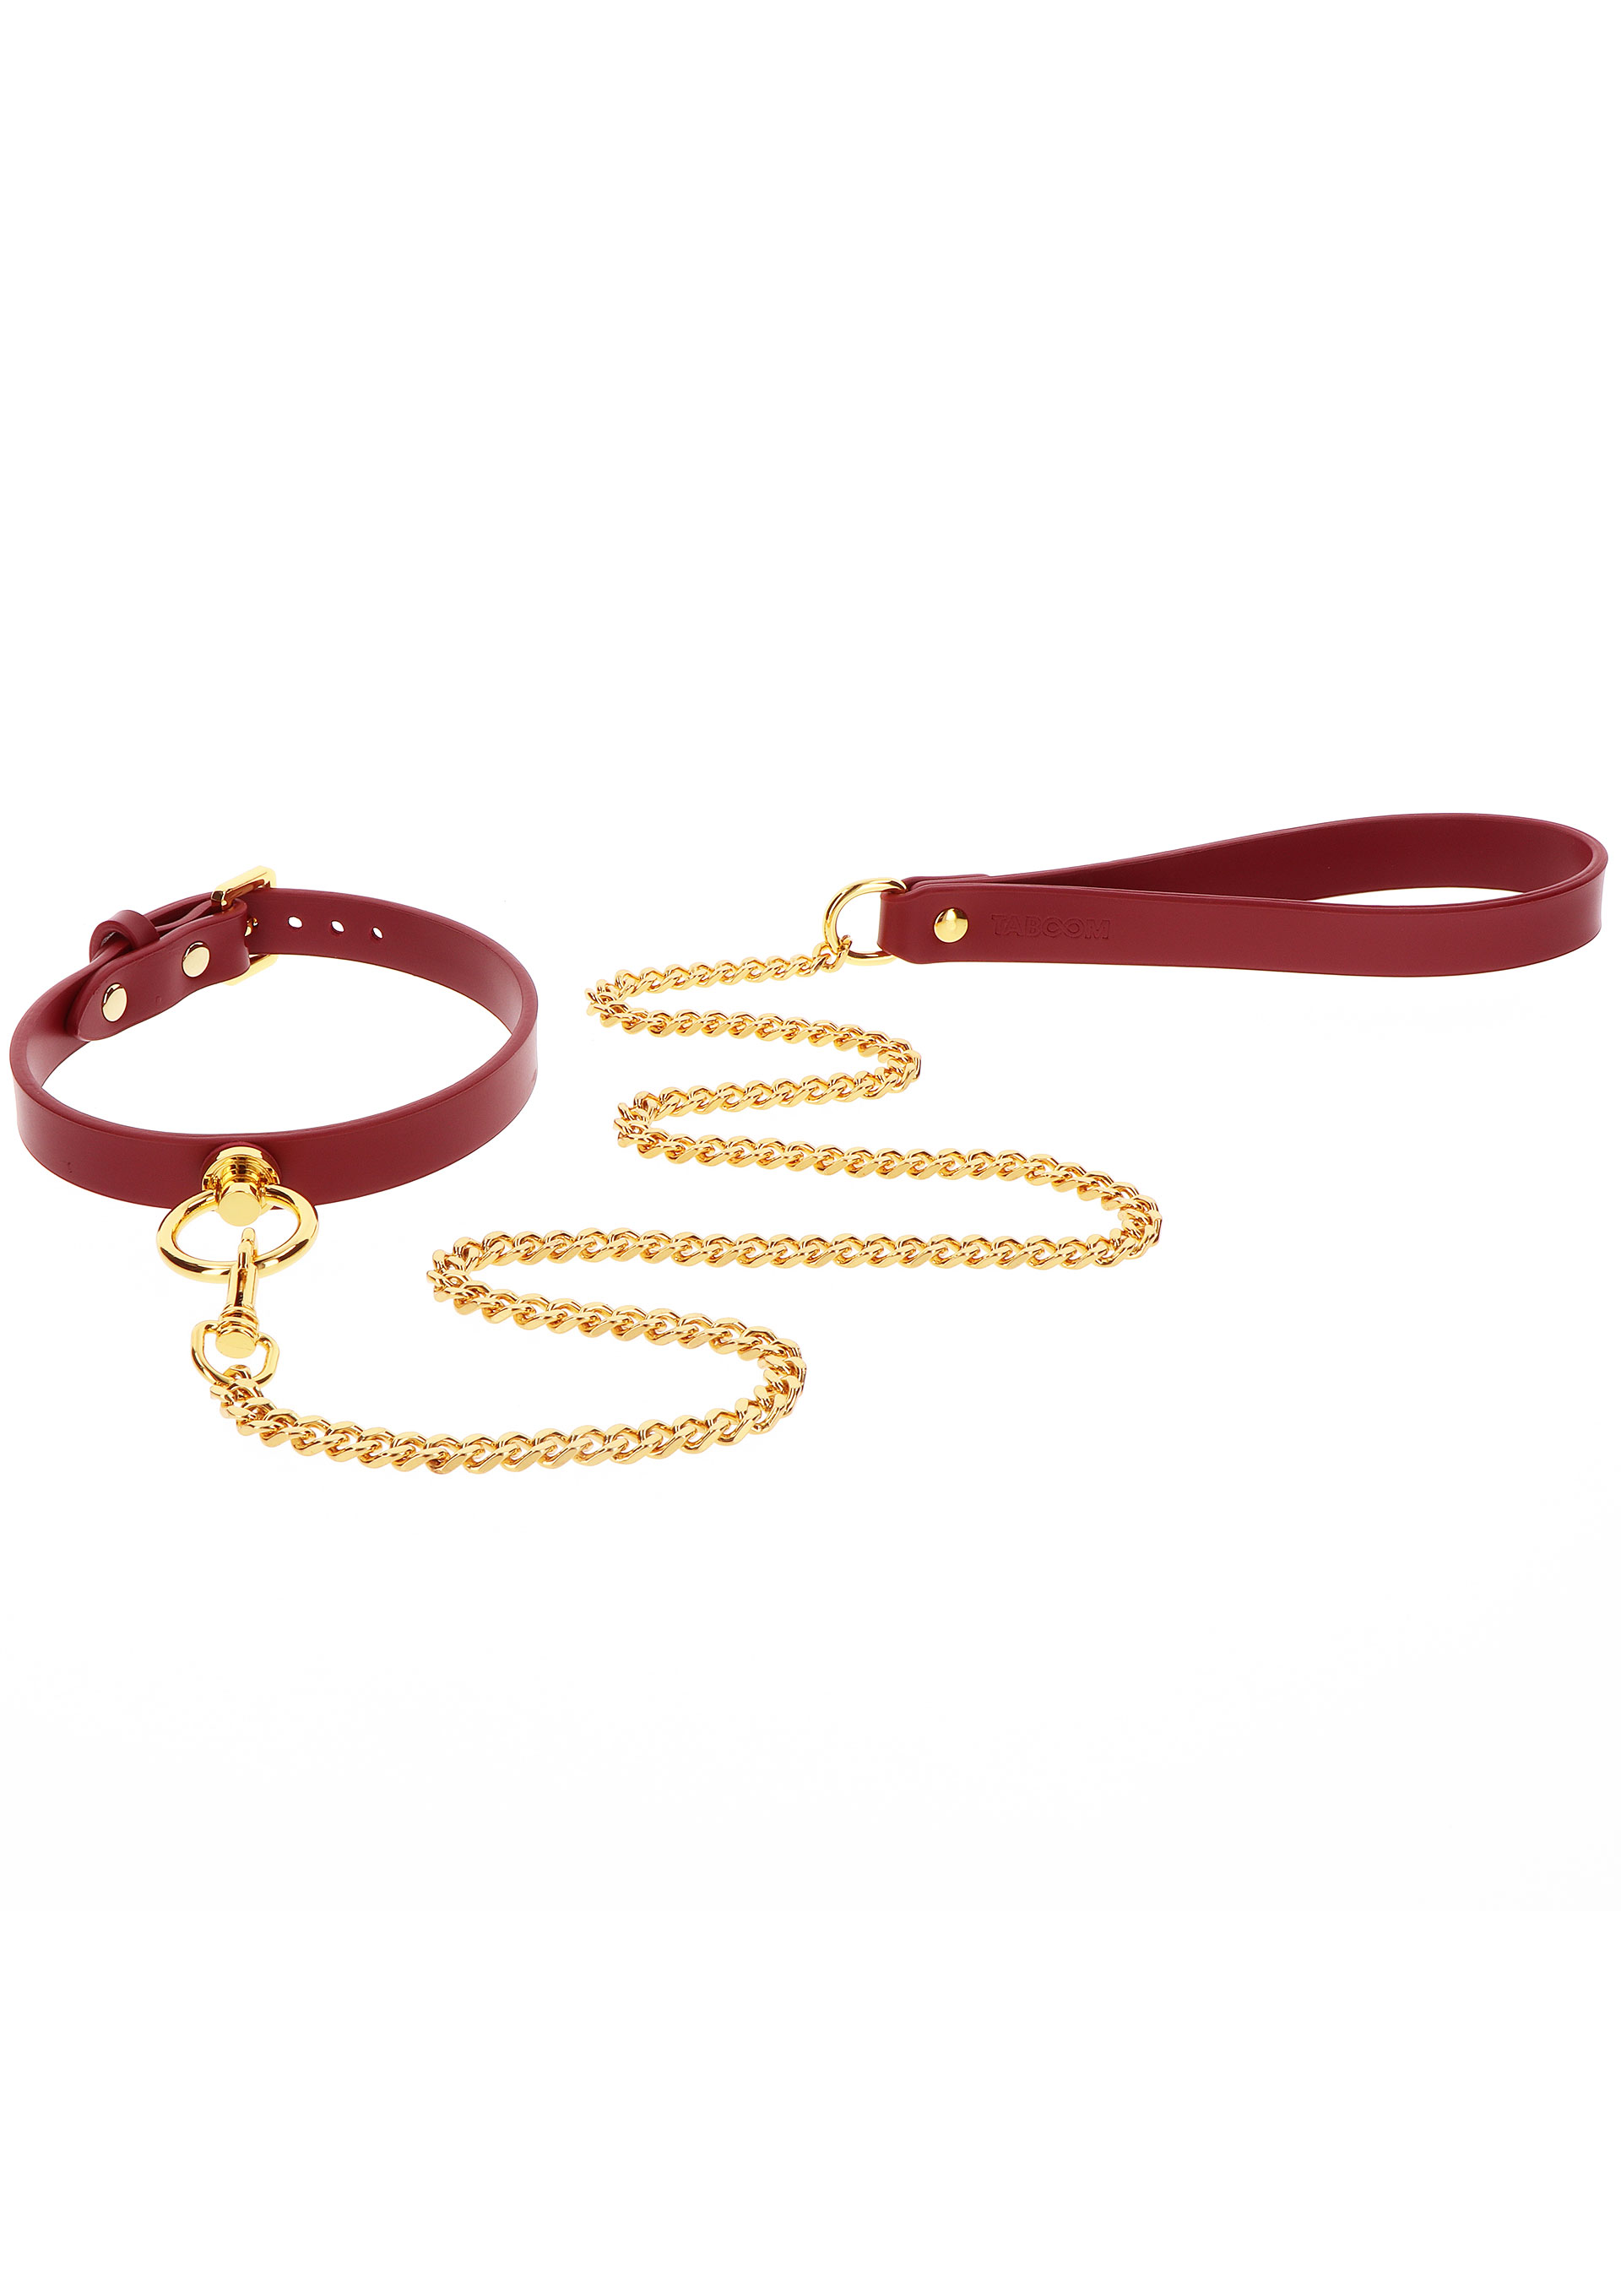 Taboom - Taboom O-Ring Collar and Chain Leash